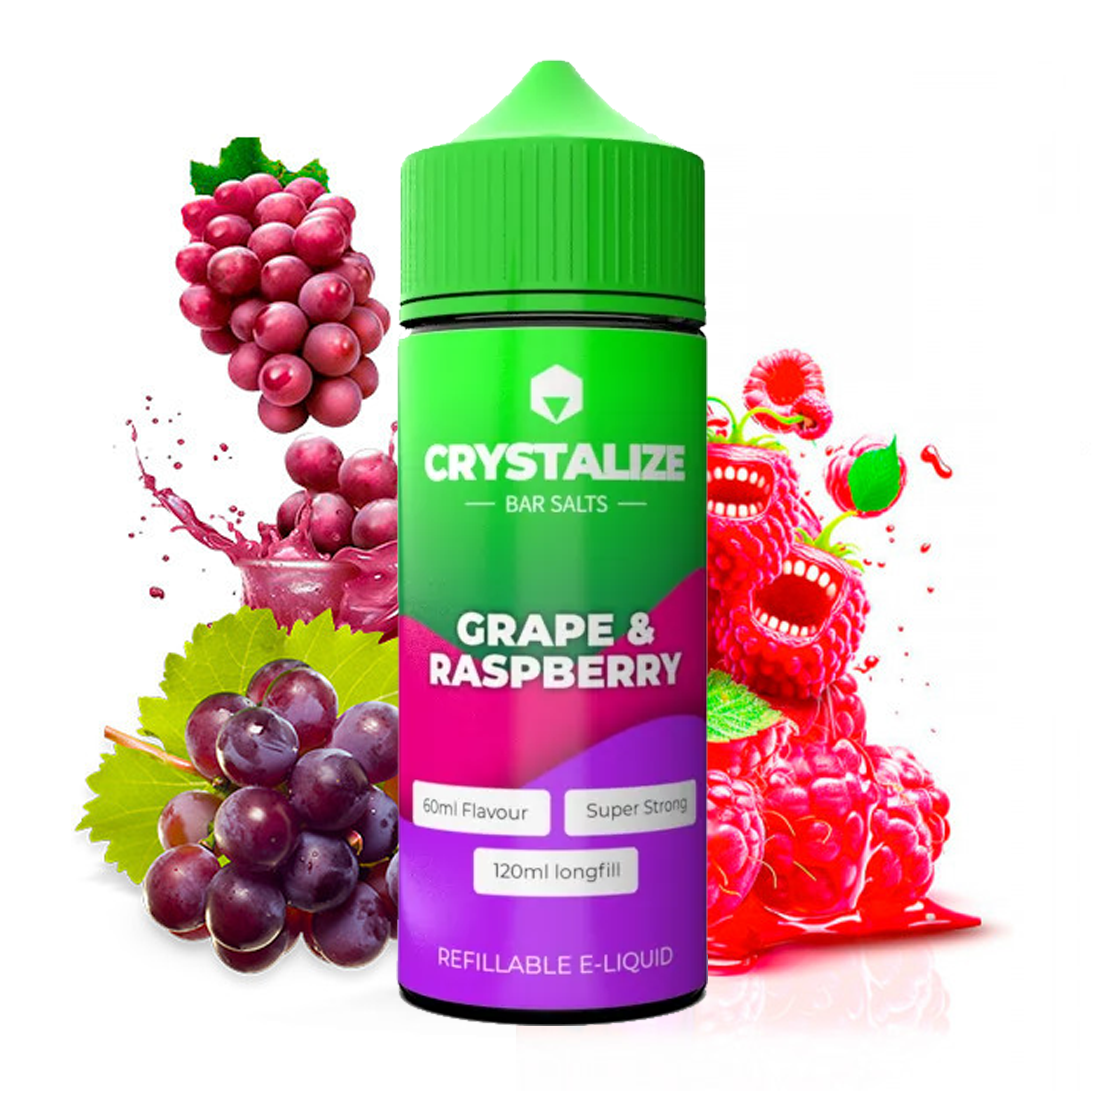 Crystalize - Grape & Raspberry 100ml Longfill